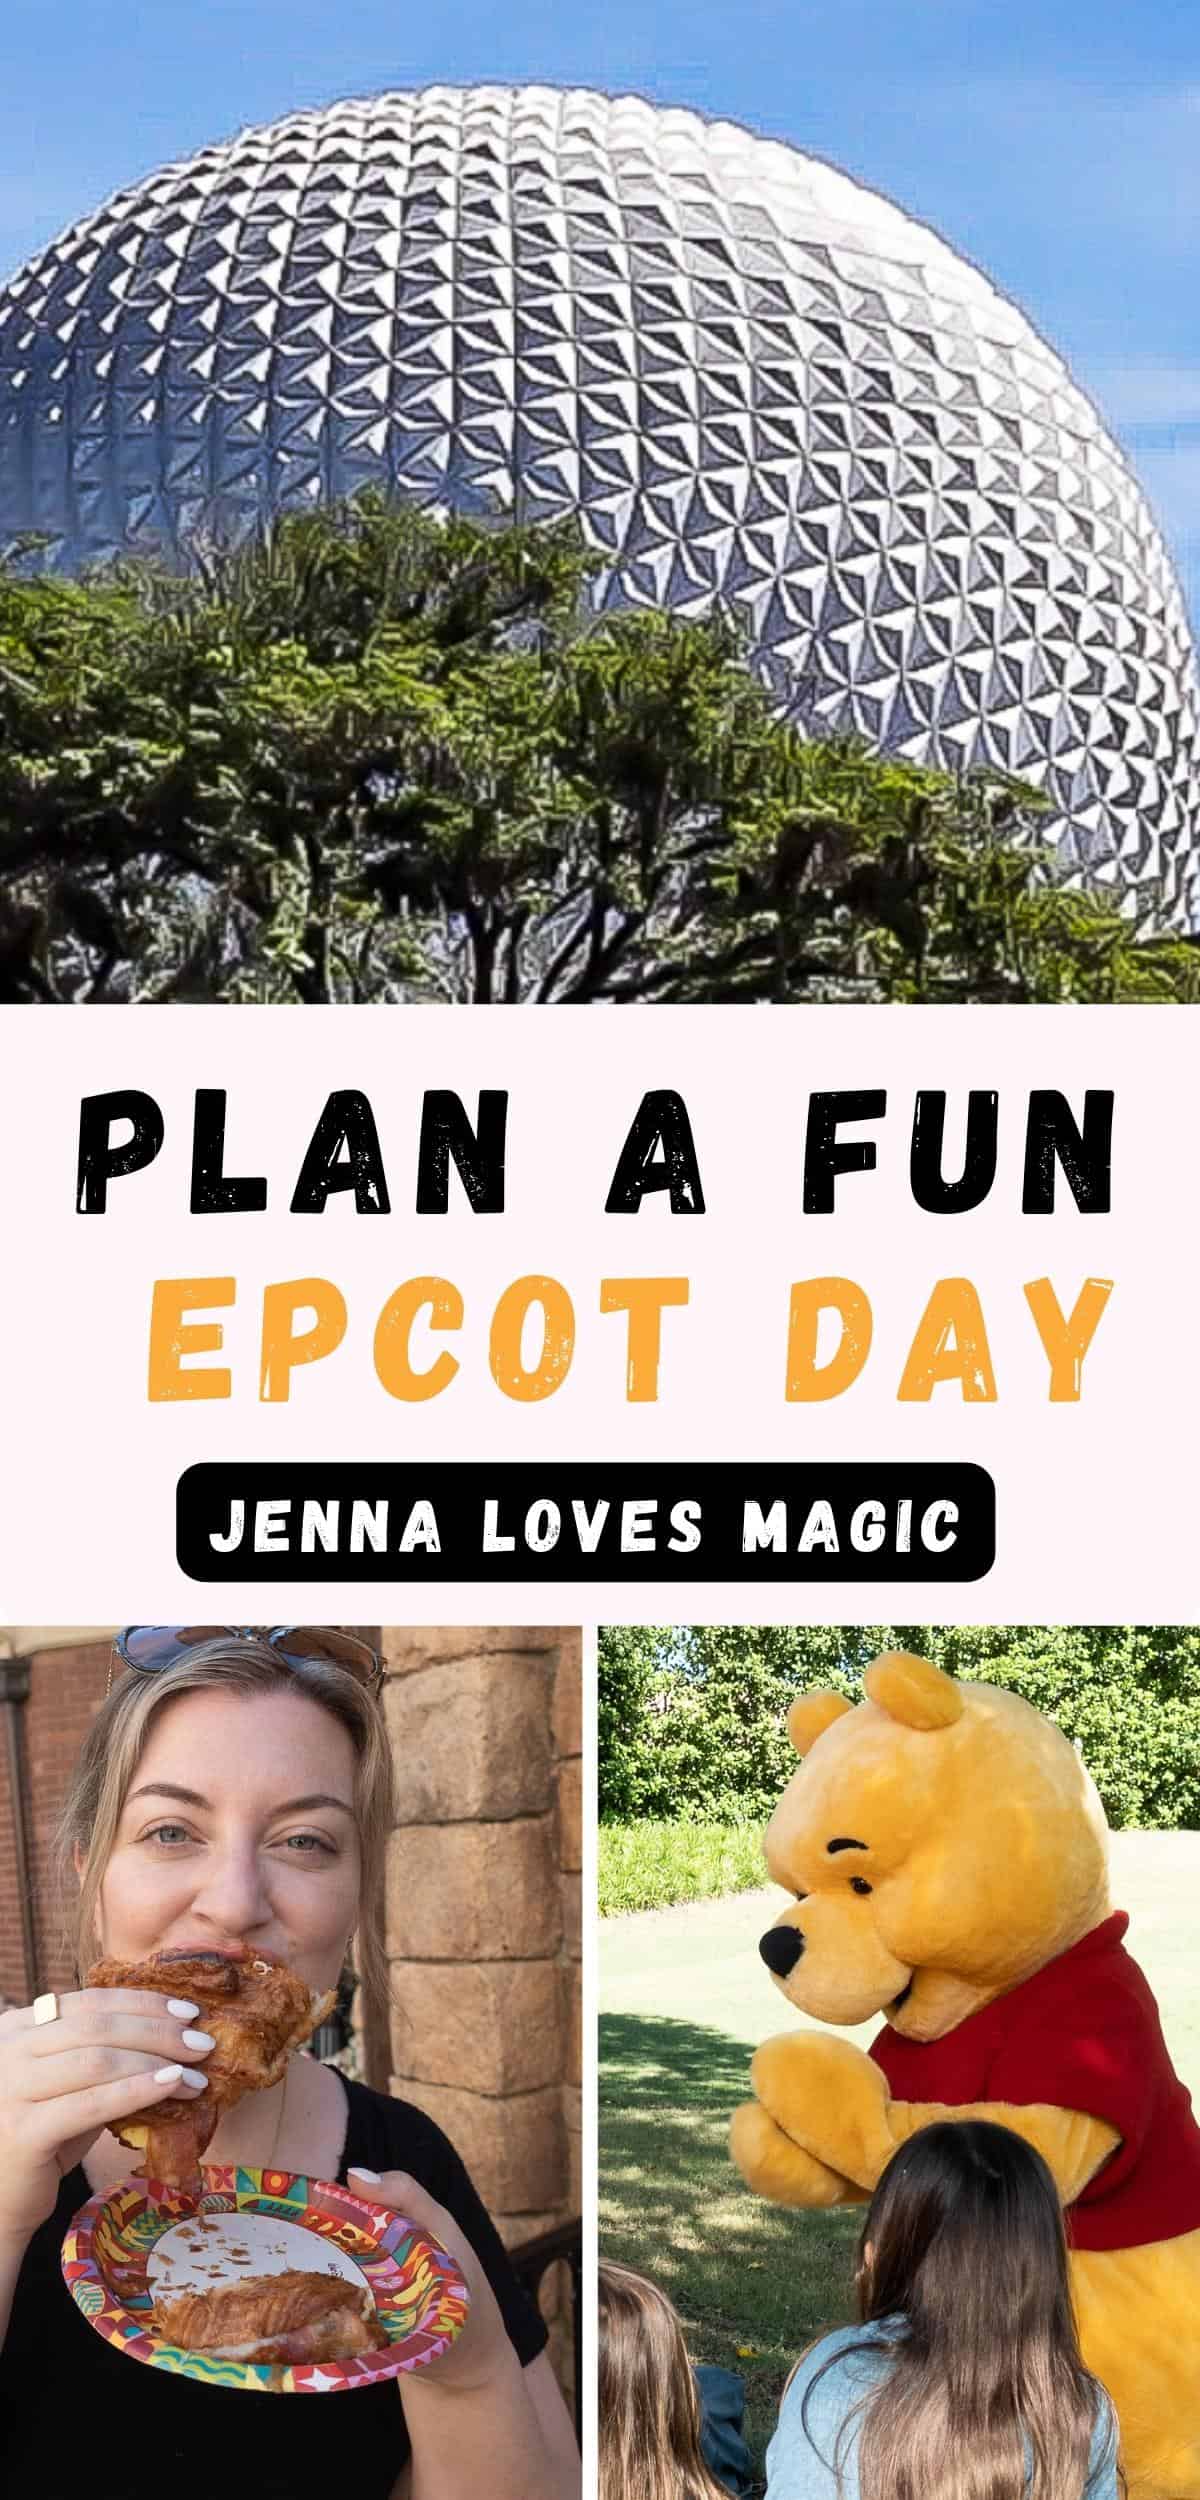 Disney World EPCOT Itinerary Planning Tips